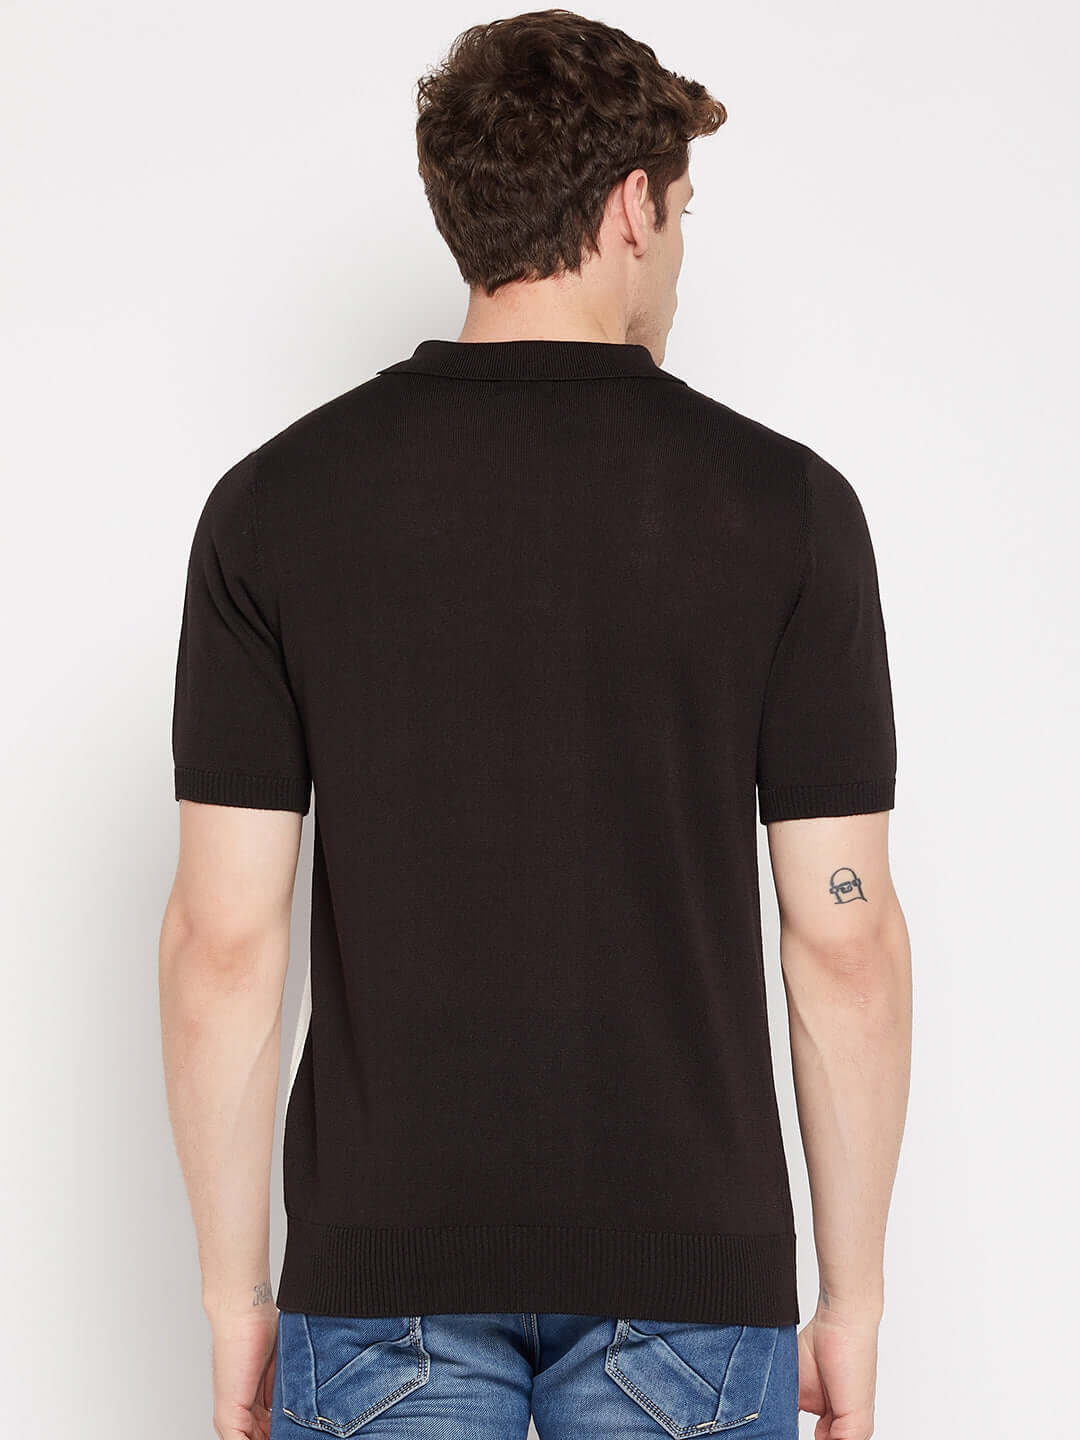 Camla Barcelona Black T-Shirt For Men